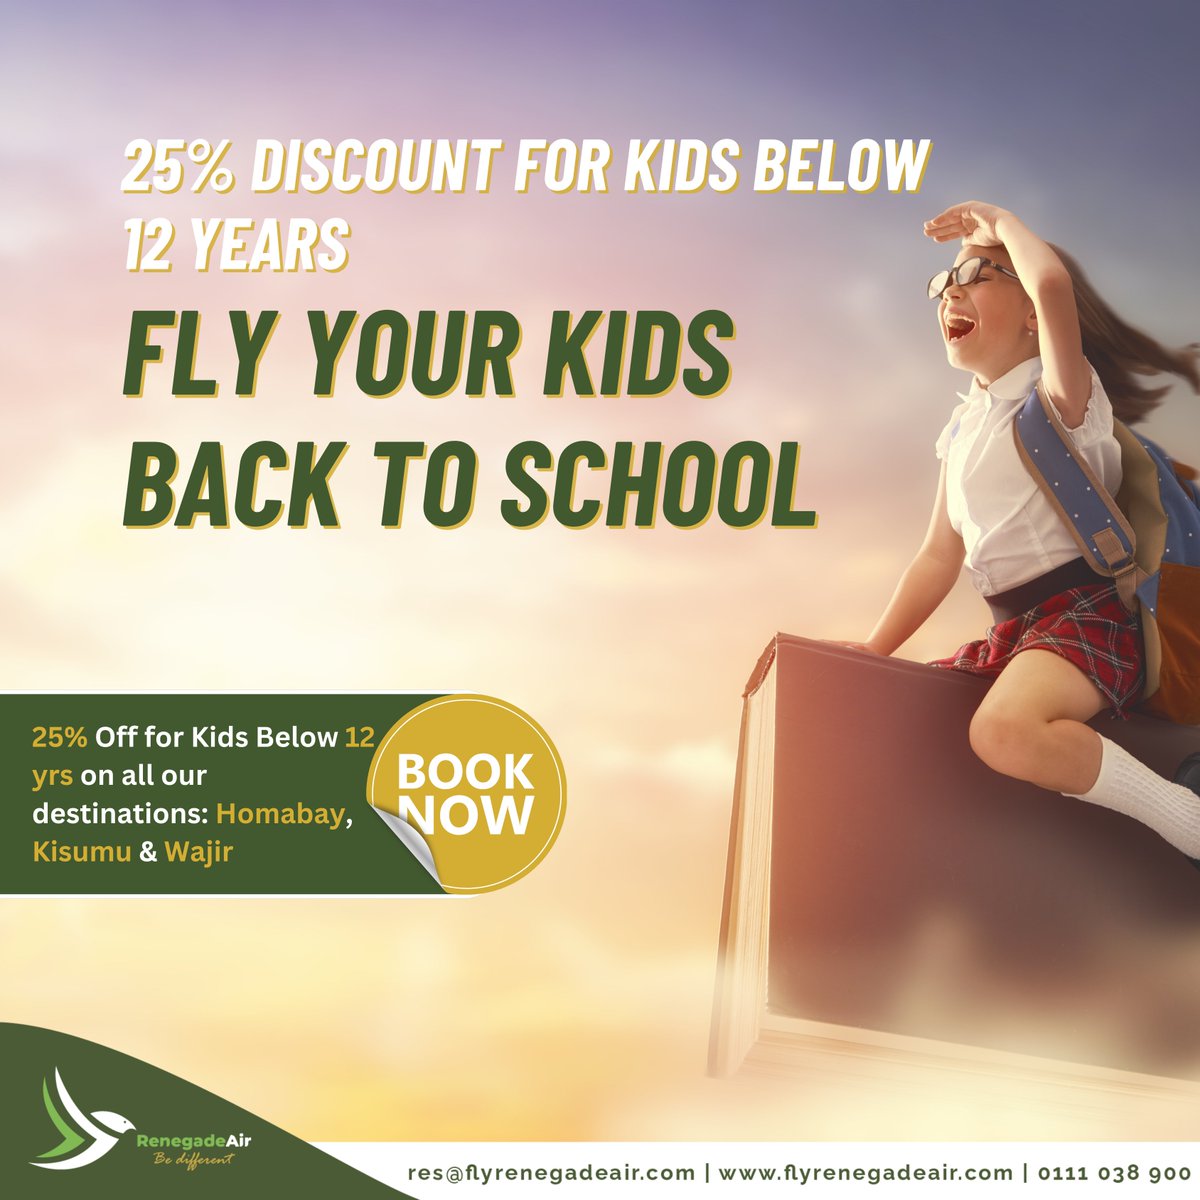 Back to school savings! Avail 25% off flights to #homabay, #kisumu & #wajir for kids under 12 years.
#backtoschool #newyear #flyrenegadeair #flyrenegadeairexperience #bediffrent #explore